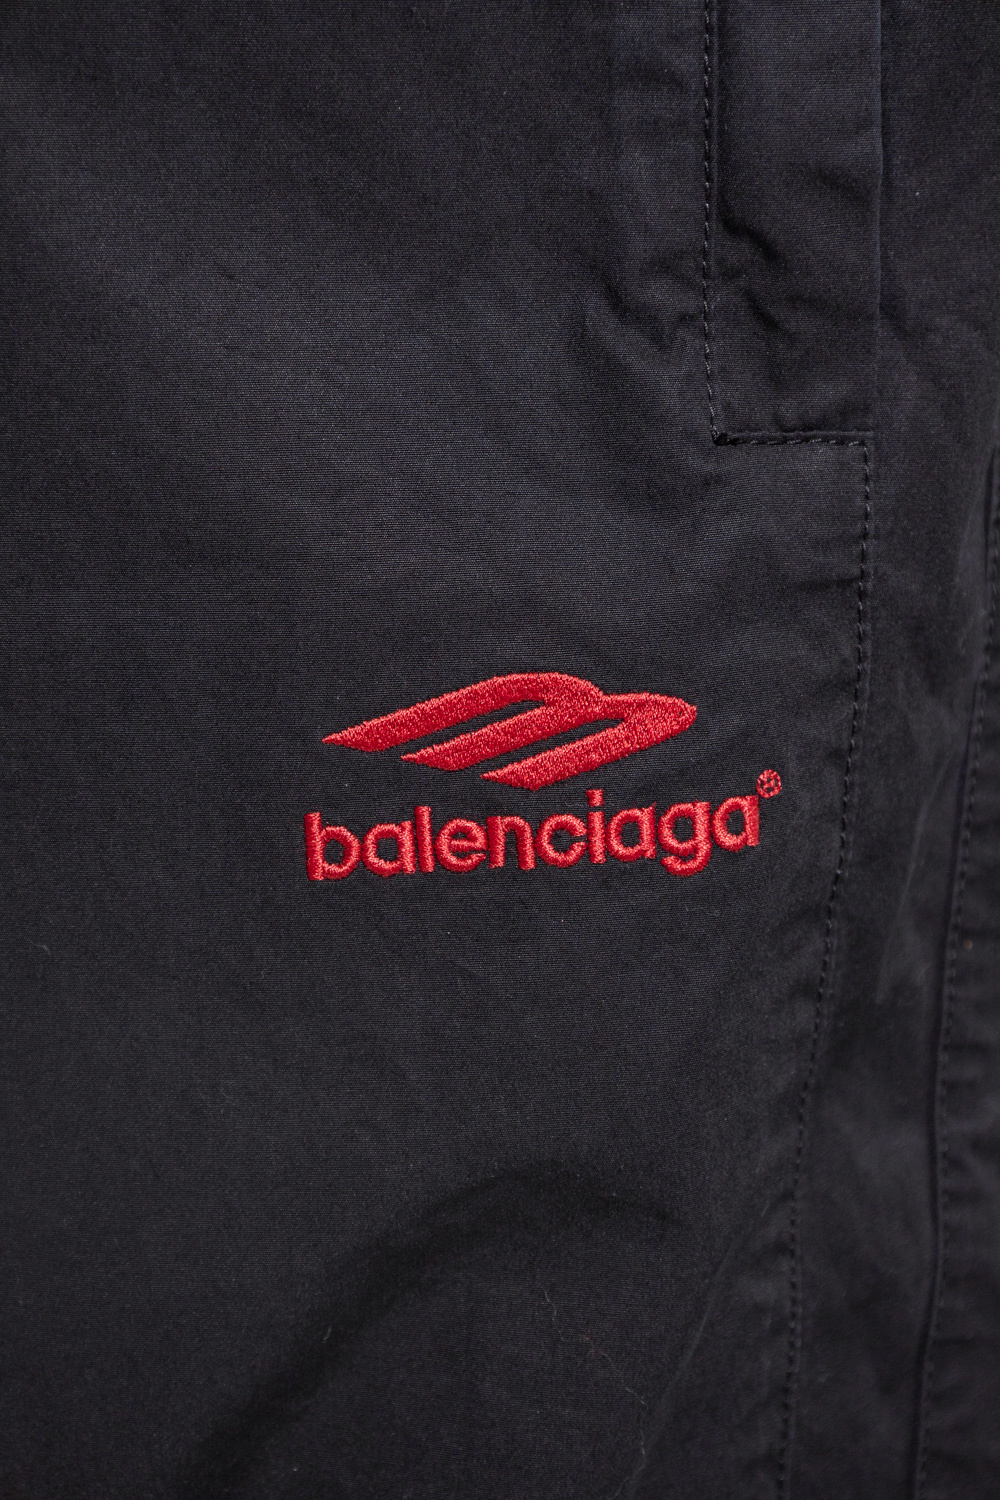 Balenciaga clothing trousers with logo